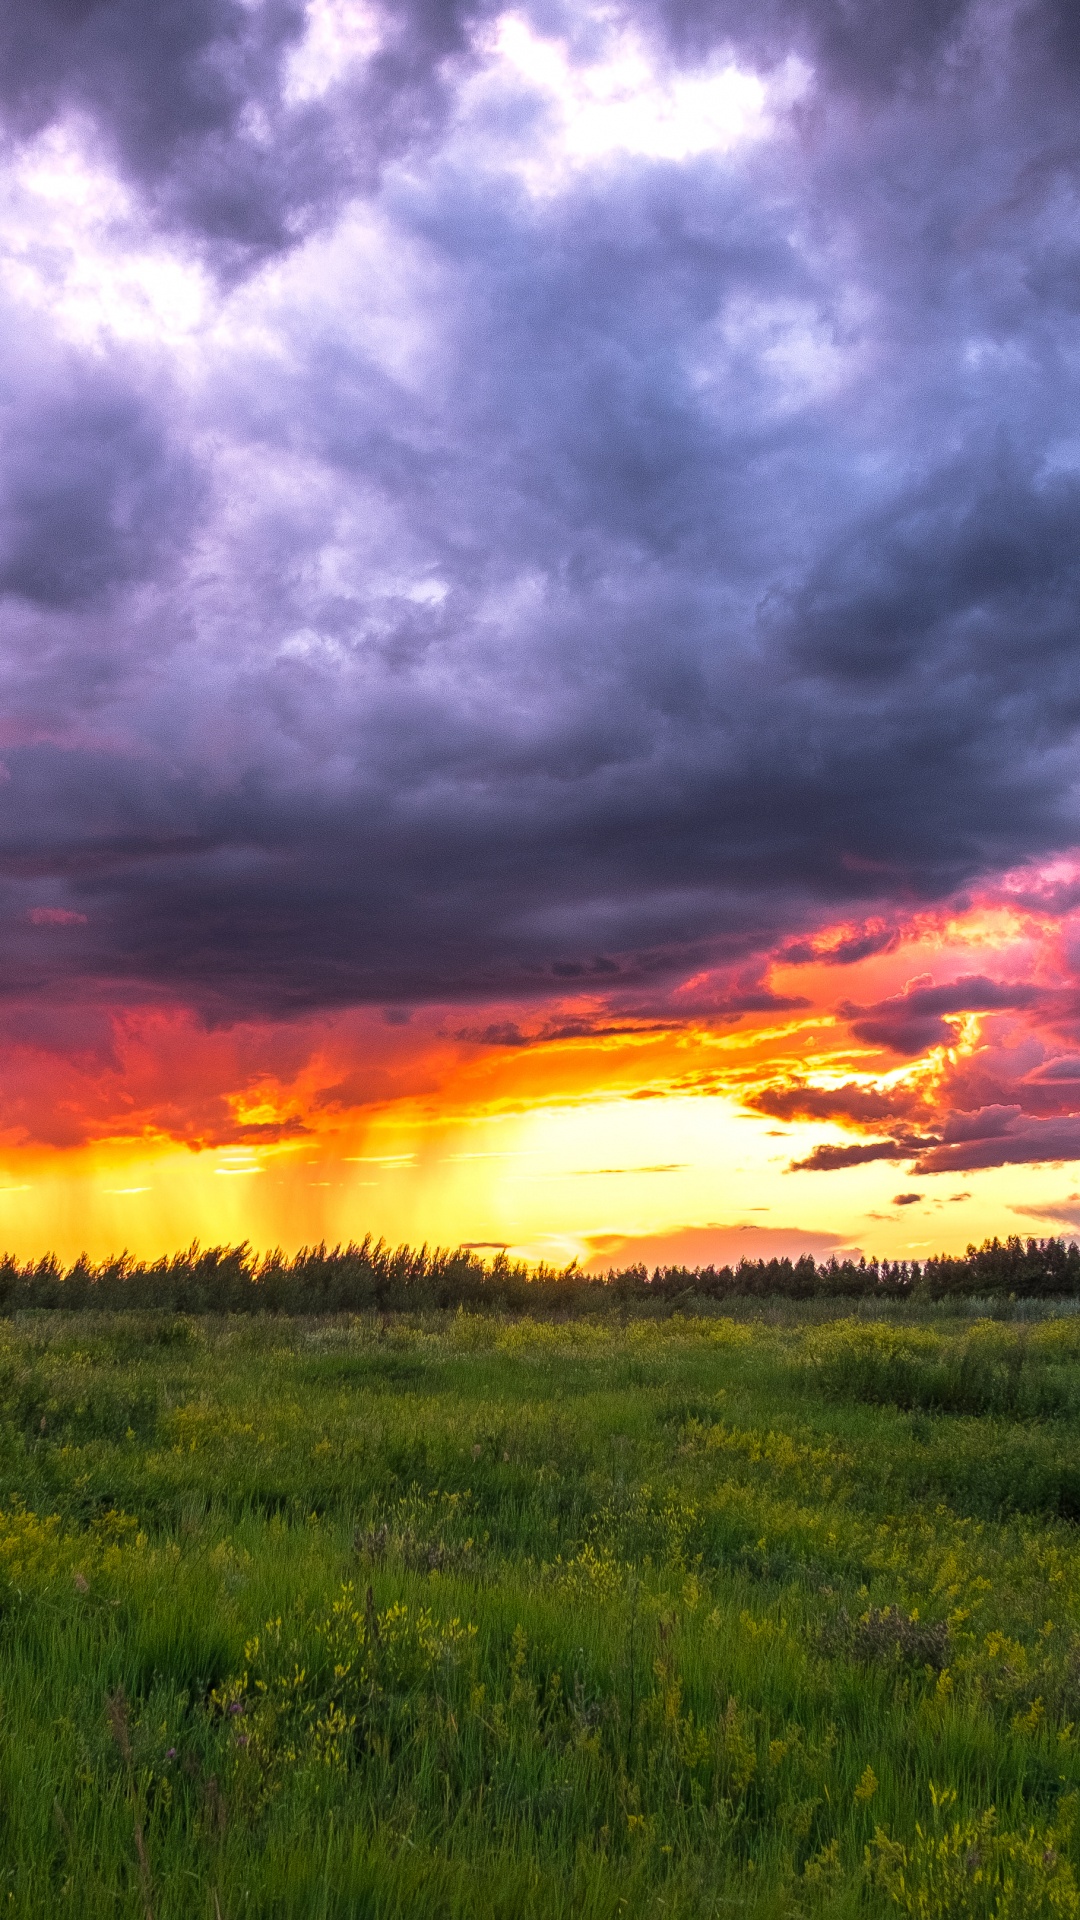 Green Grass Field Under Cloudy Sky During Sunset. Wallpaper in 1080x1920 Resolution